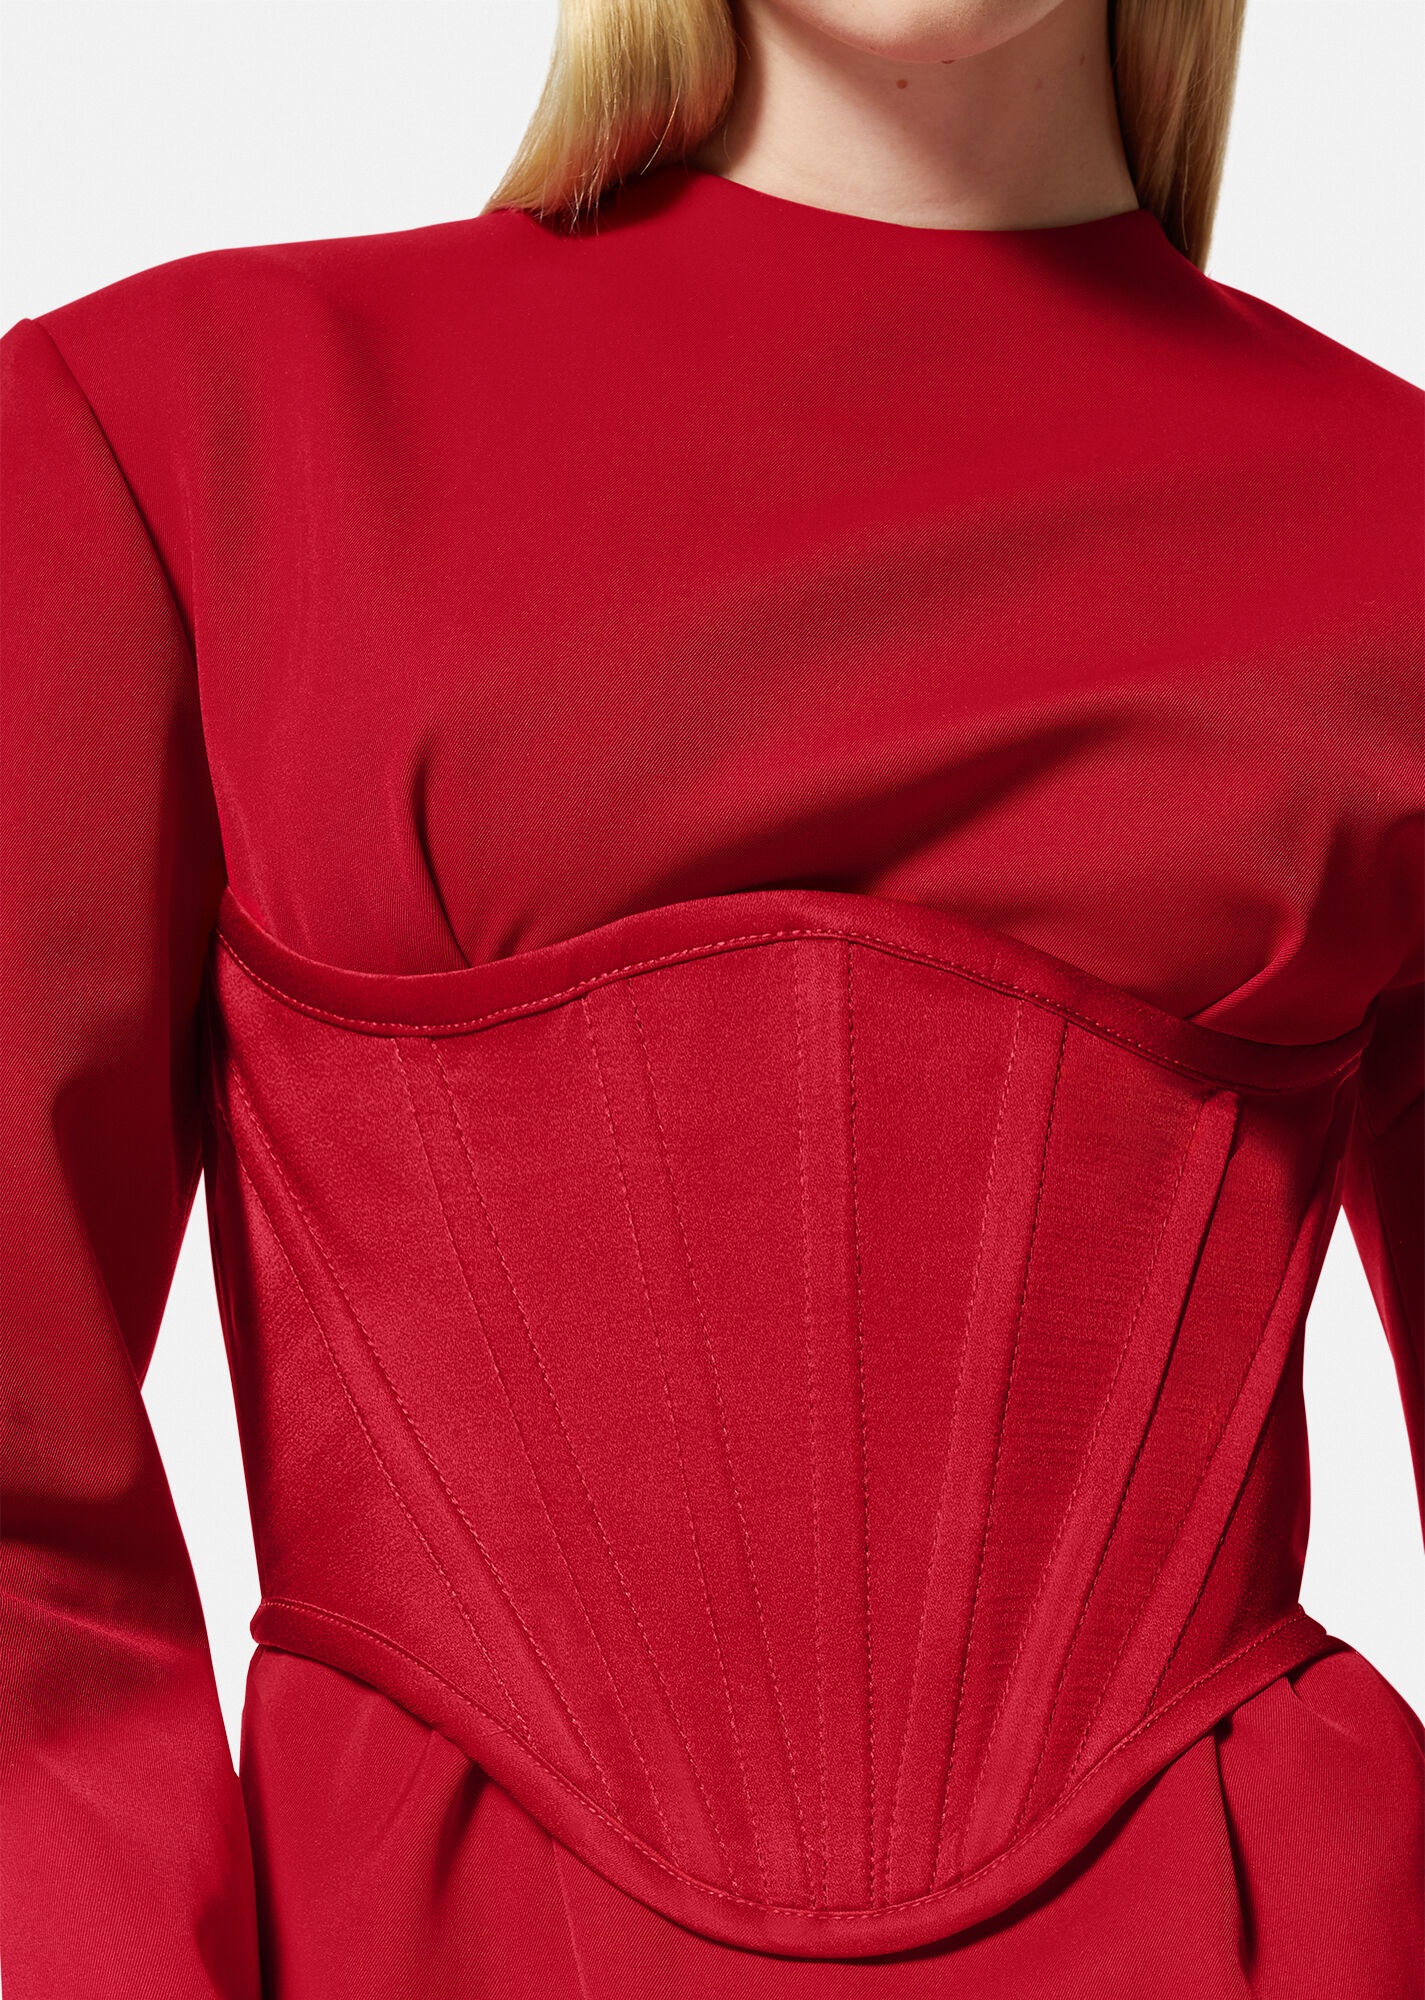 Versace Red Corset Mini Dress